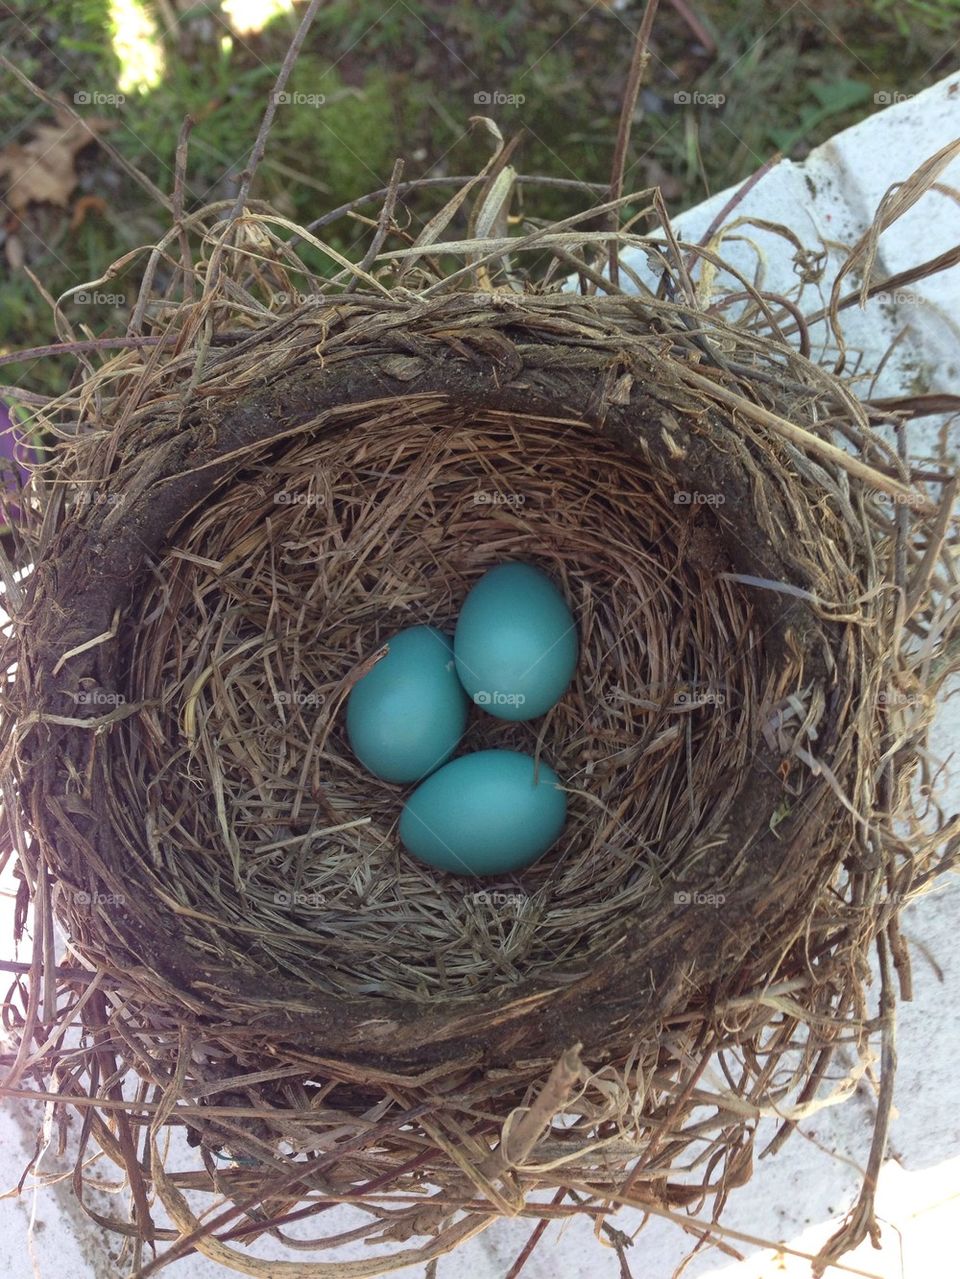 Robin's eggs